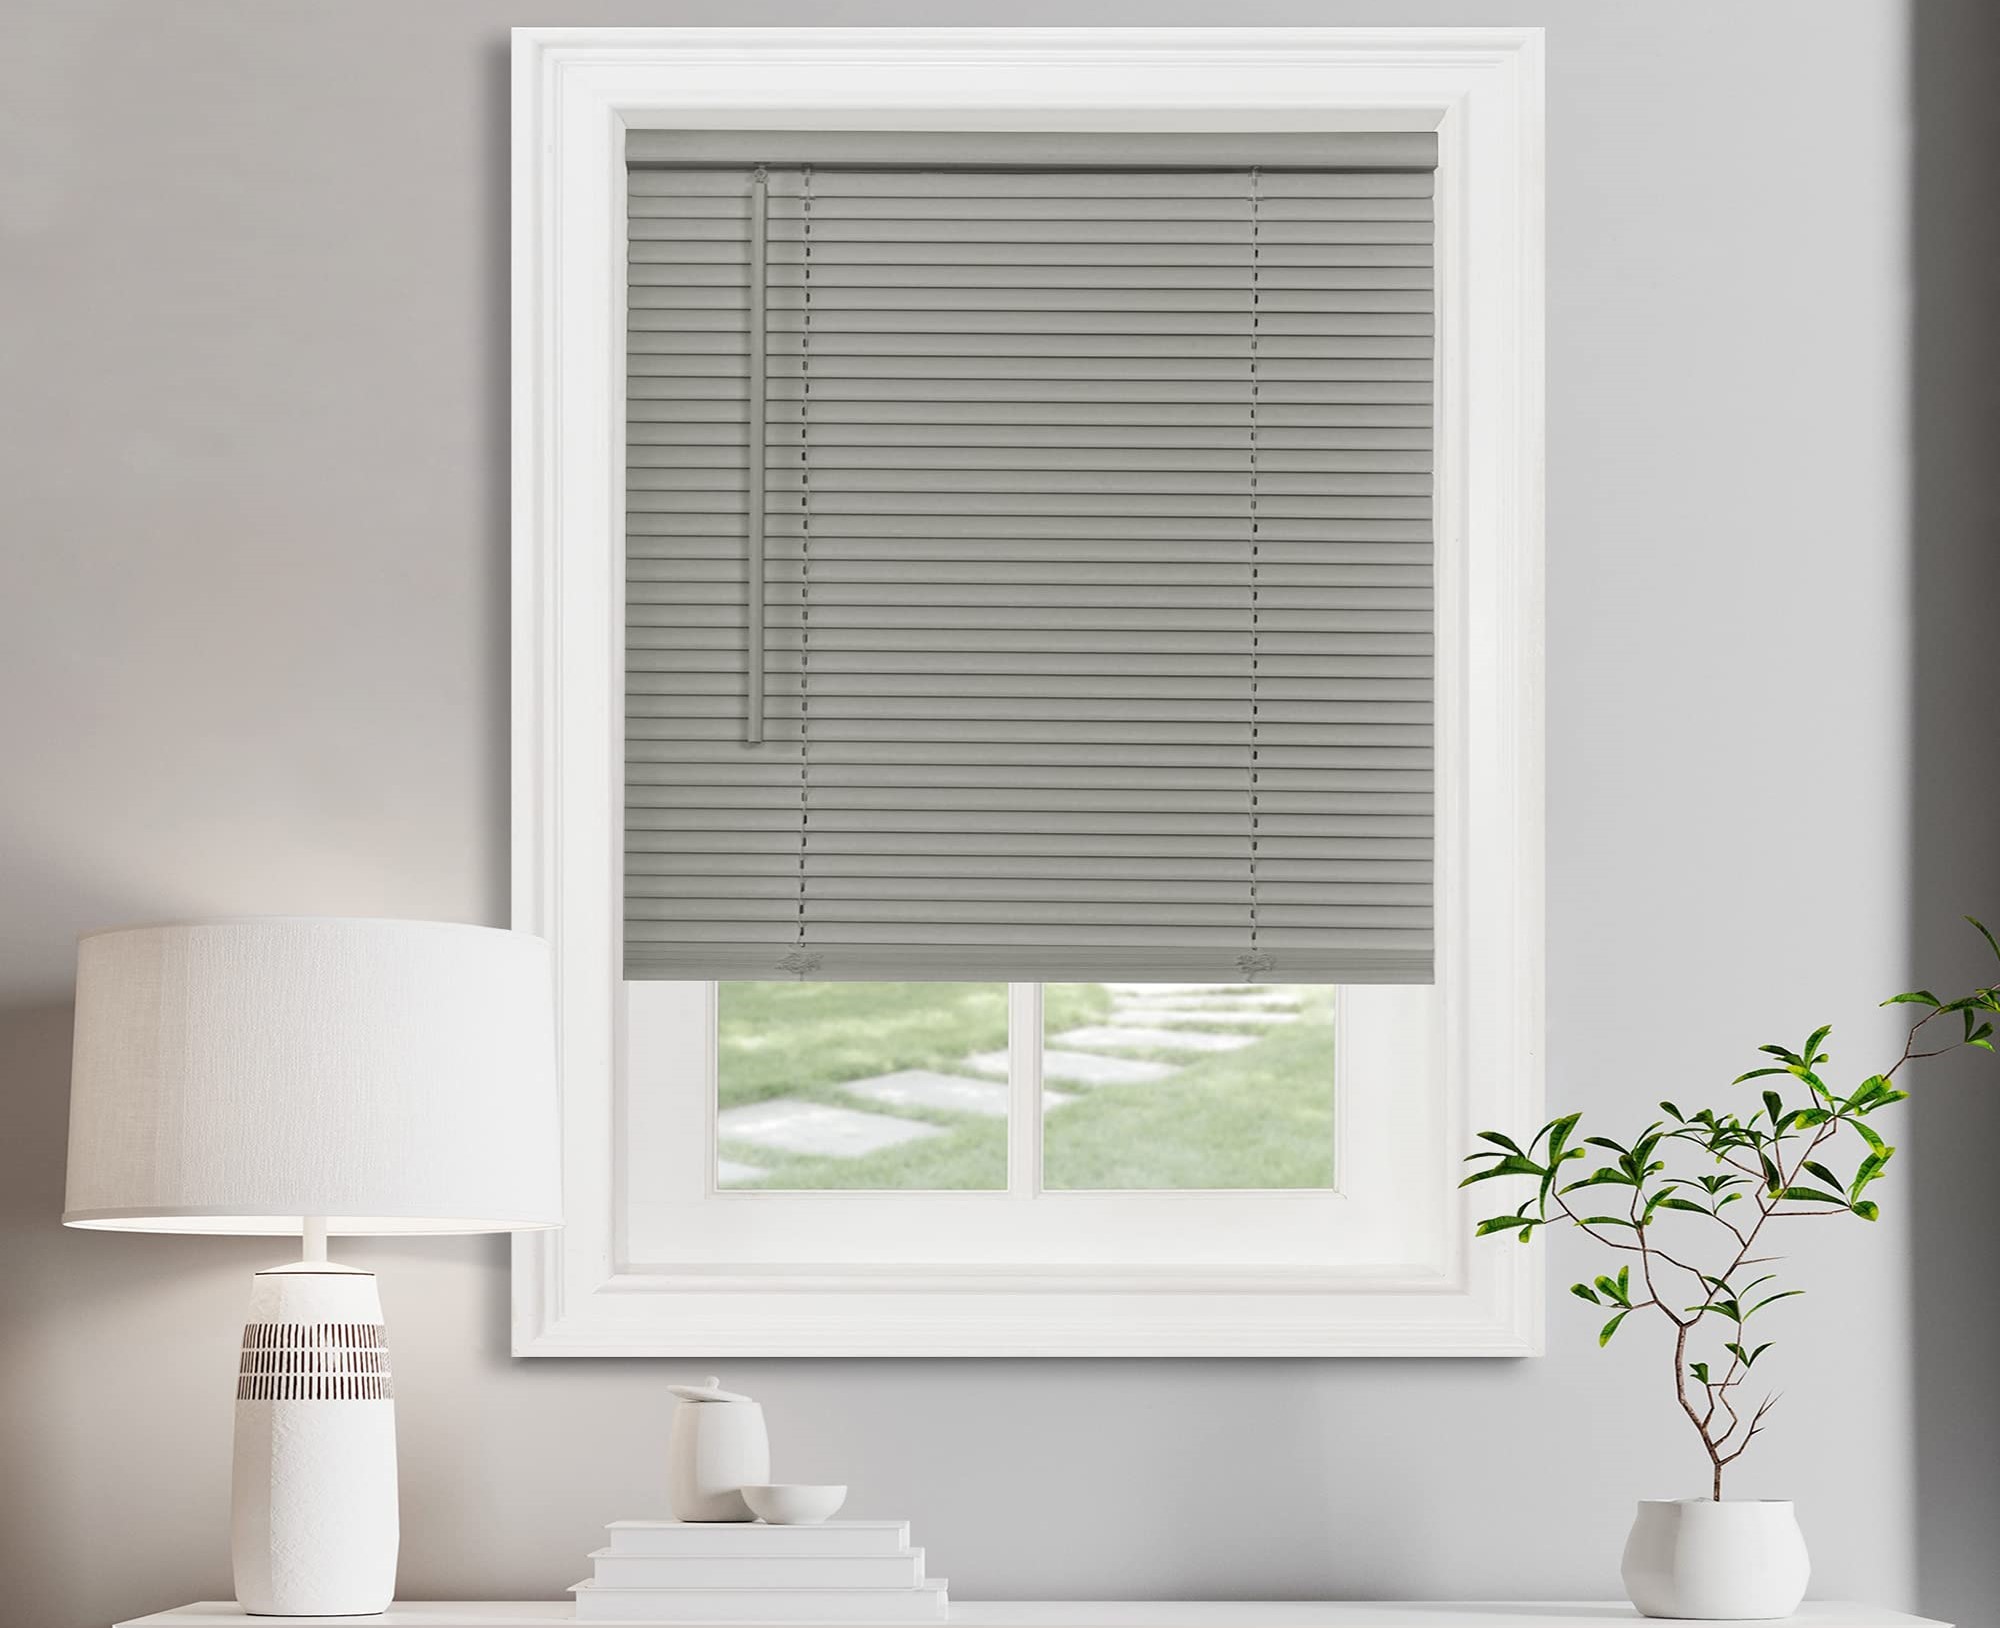 How To Shorten Cordless Window Blinds